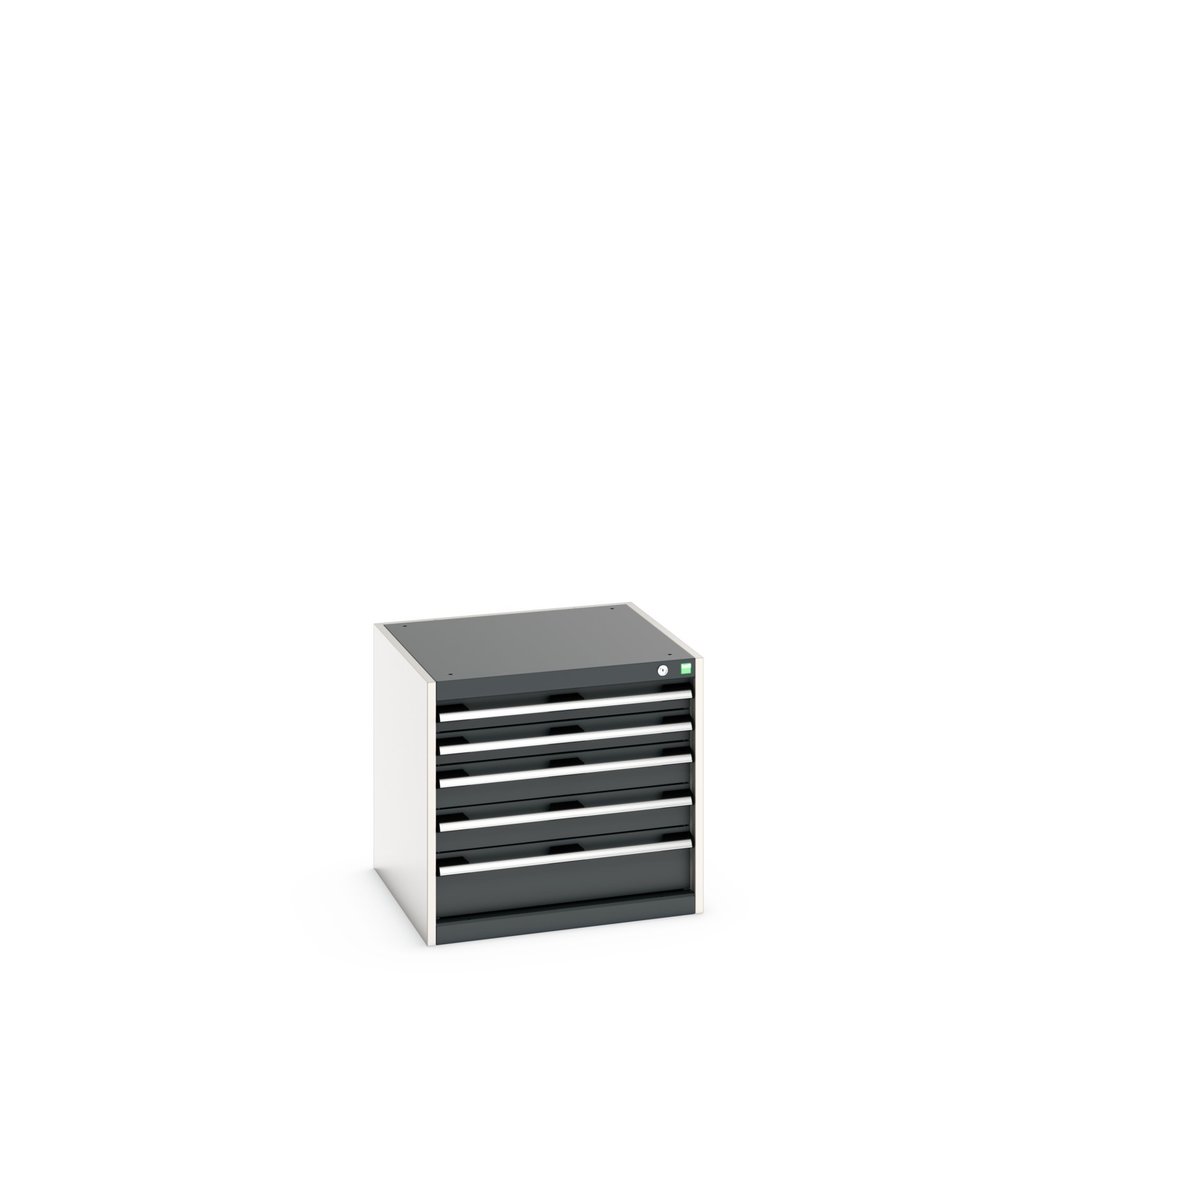 40019152. - cubio drawer cabinet